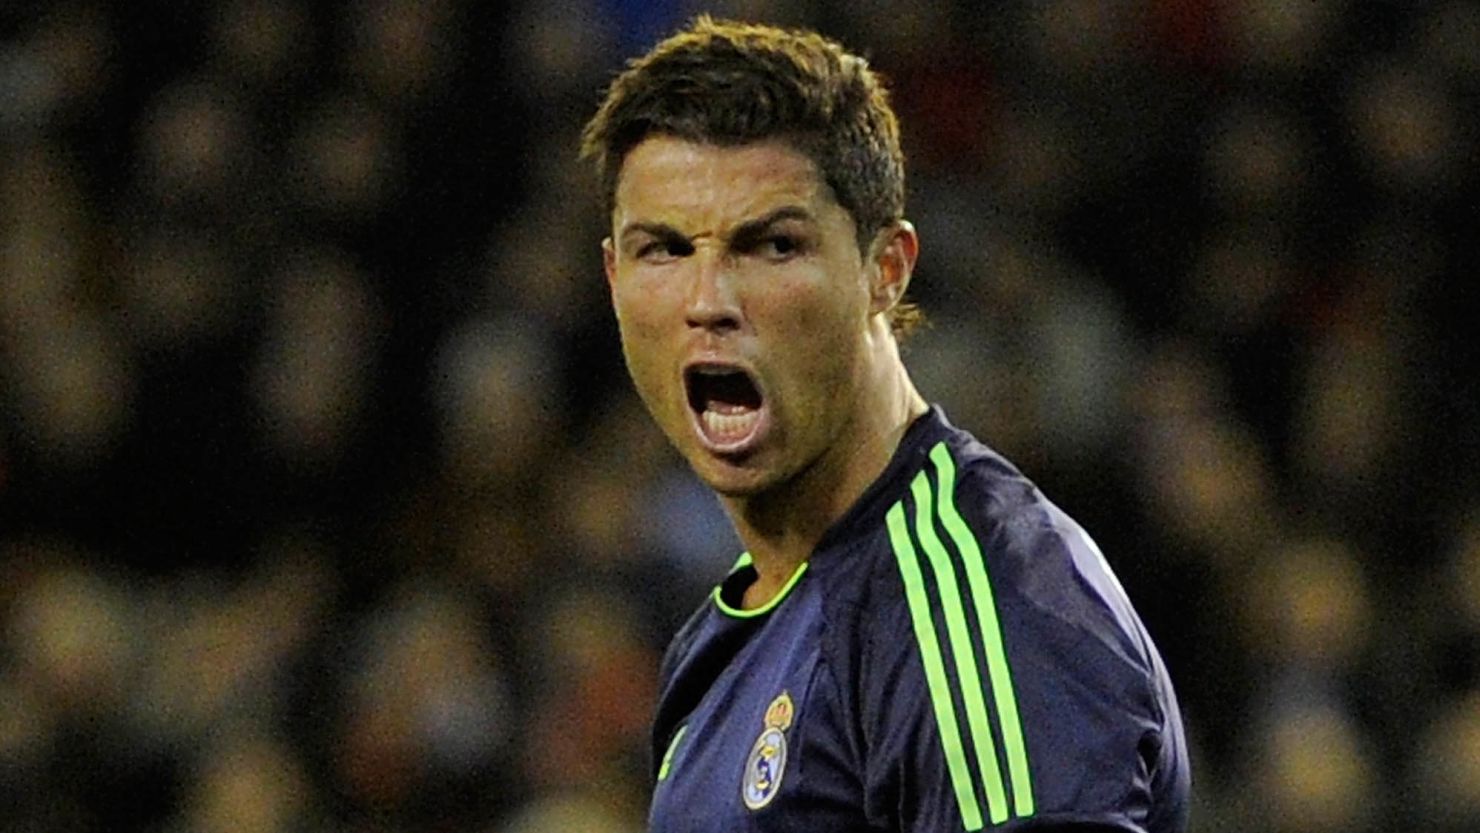 Portuguese striker Cristiano Ronaldo was in fine form as Real Madrid won 5-0 at Valencia